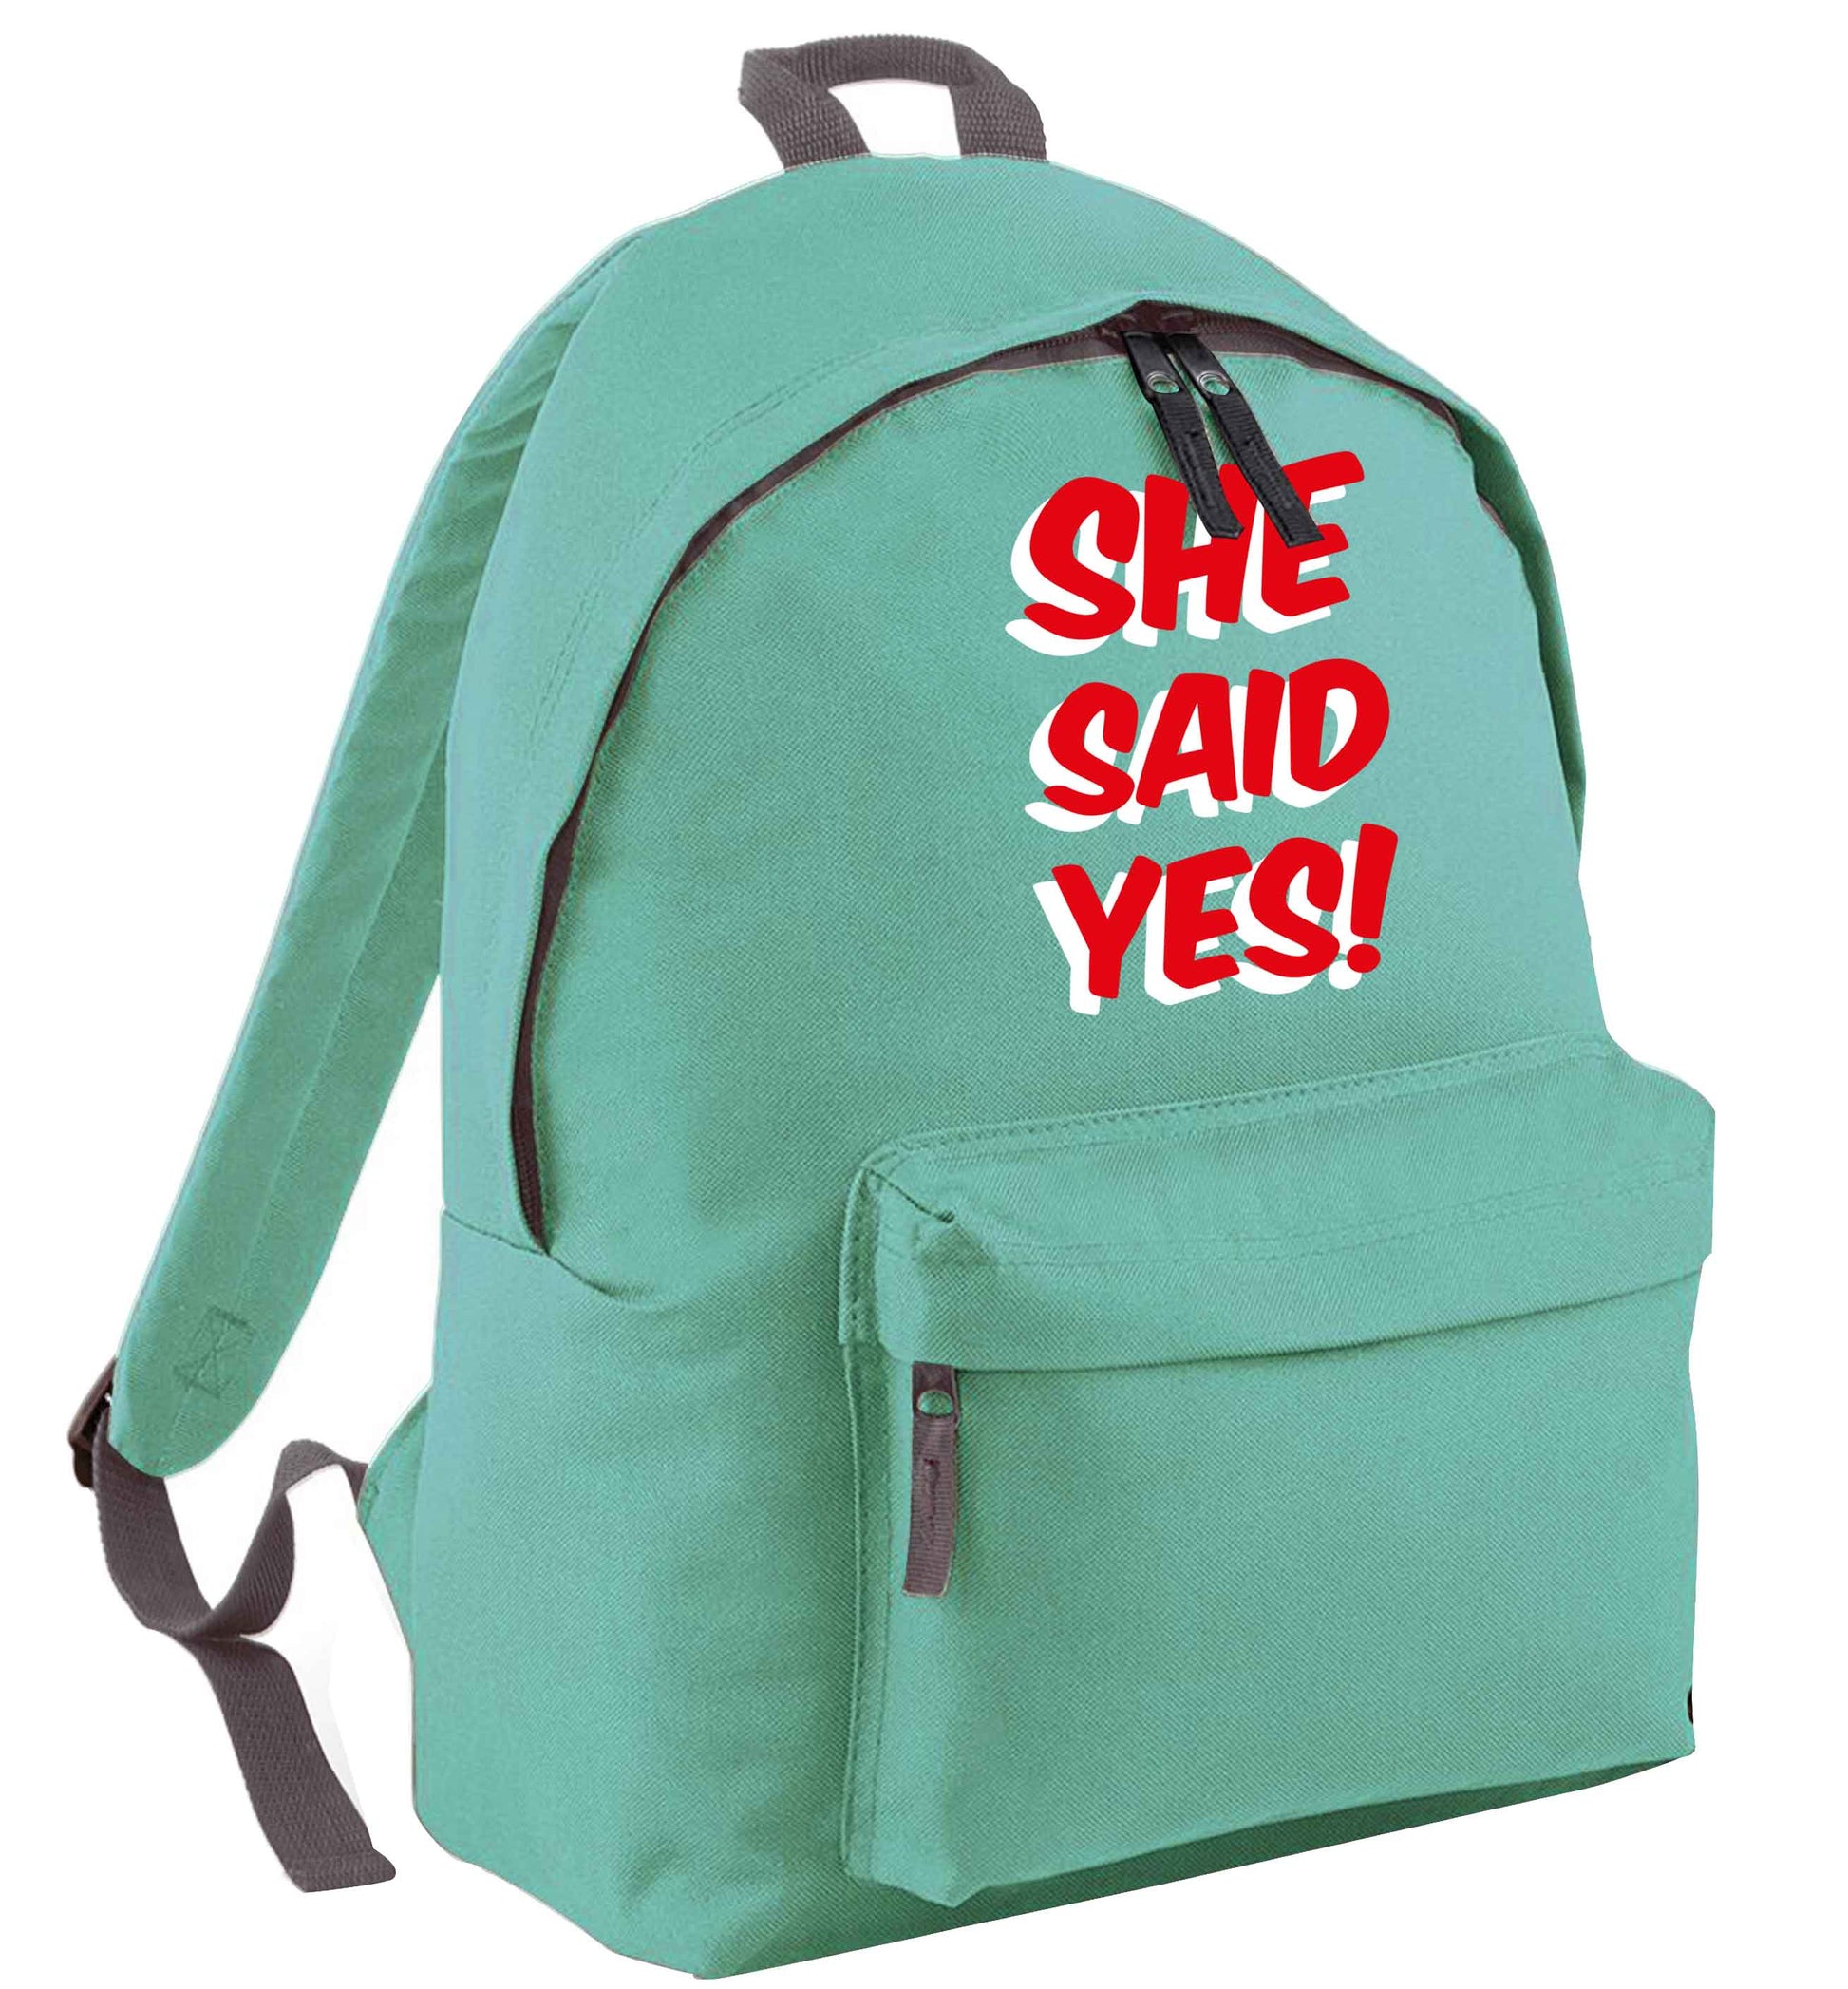 She said yes mint adults backpack